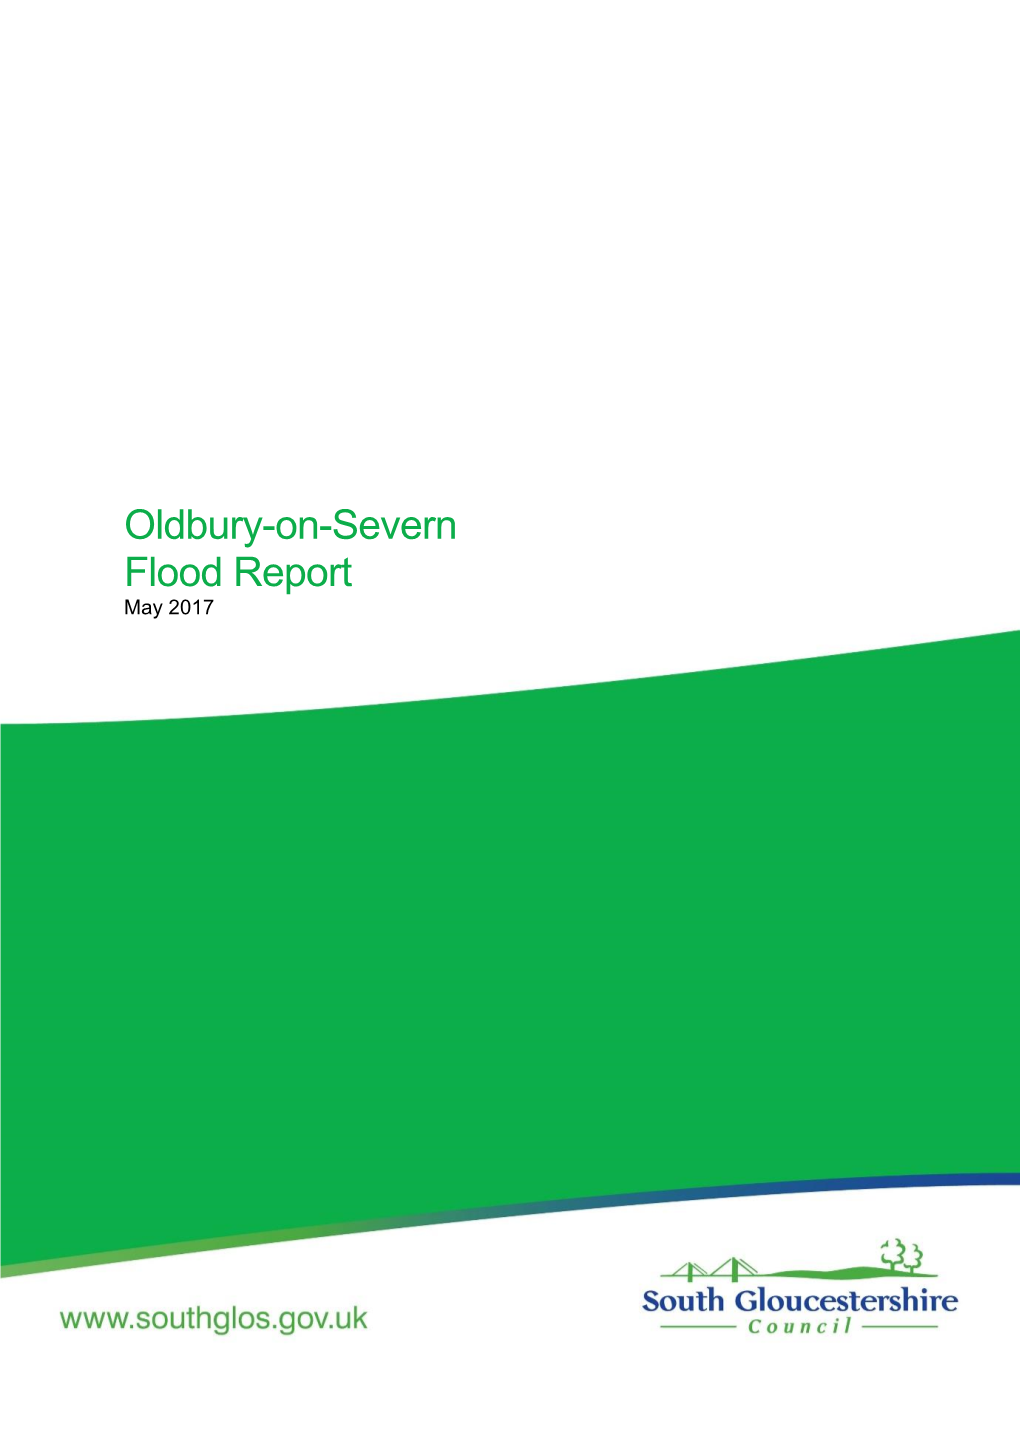 Oldbury-On-Severn Flood Report May 2017